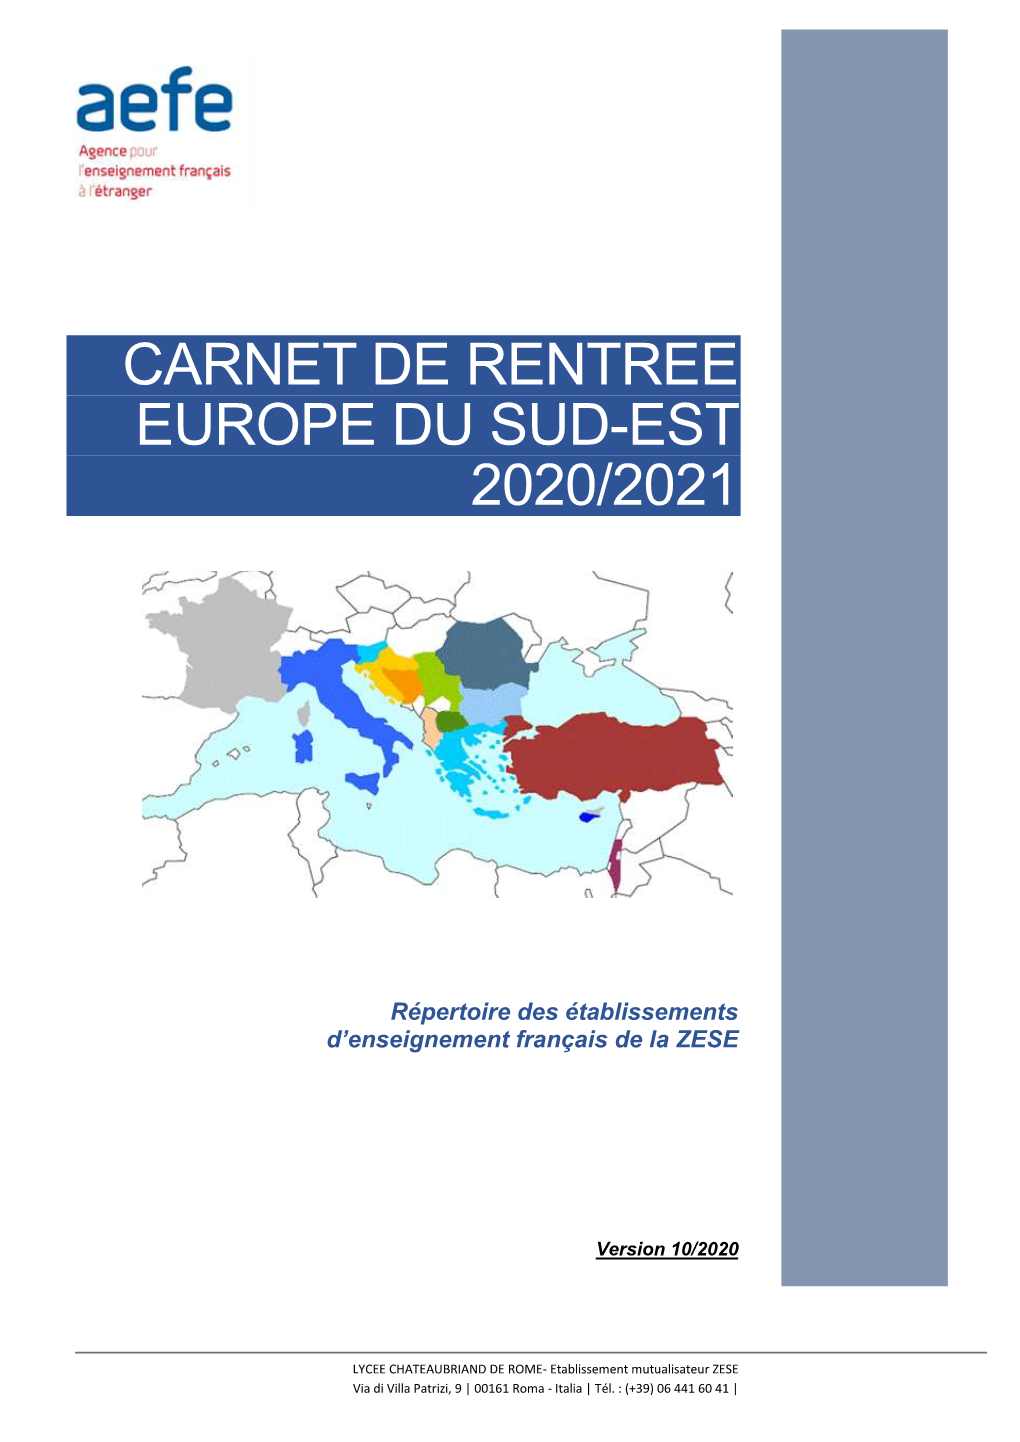 Carnet De Rentree Europe Du Sud-Est 2017/2018